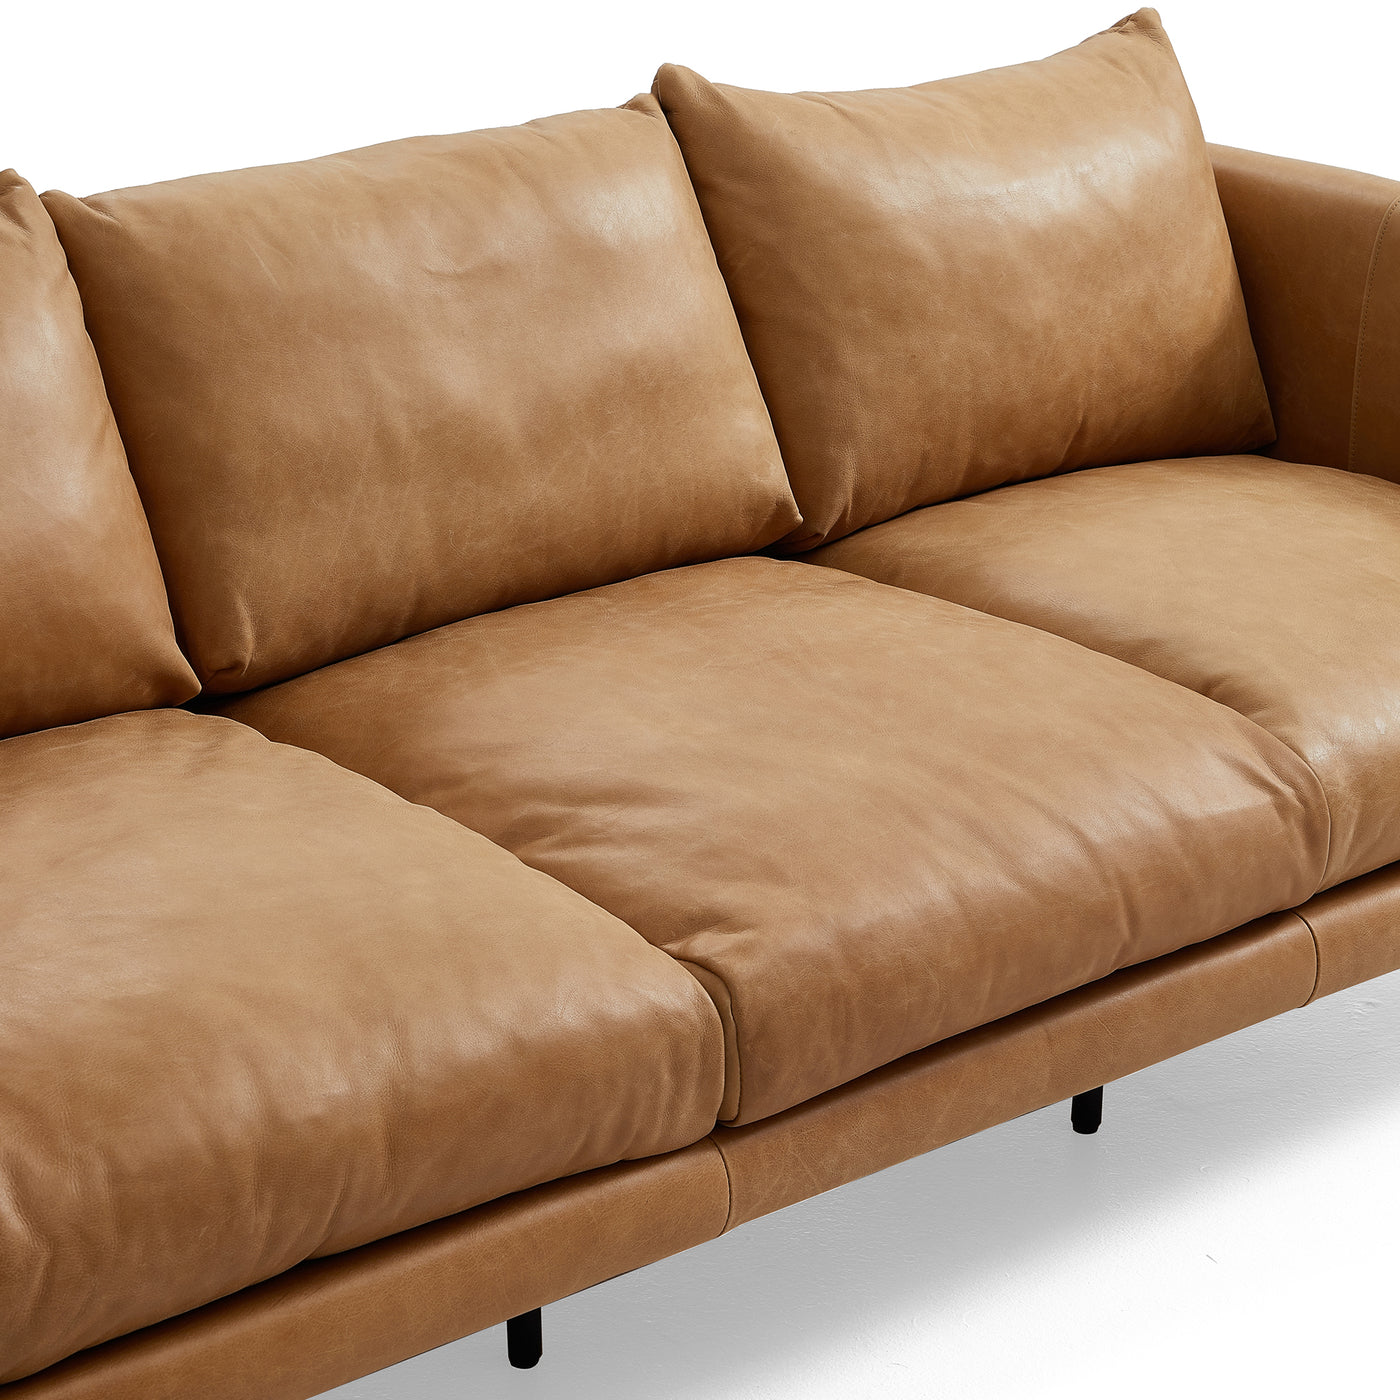 Cognac Tan Genuine Leather Straight Back Sofa-Tan